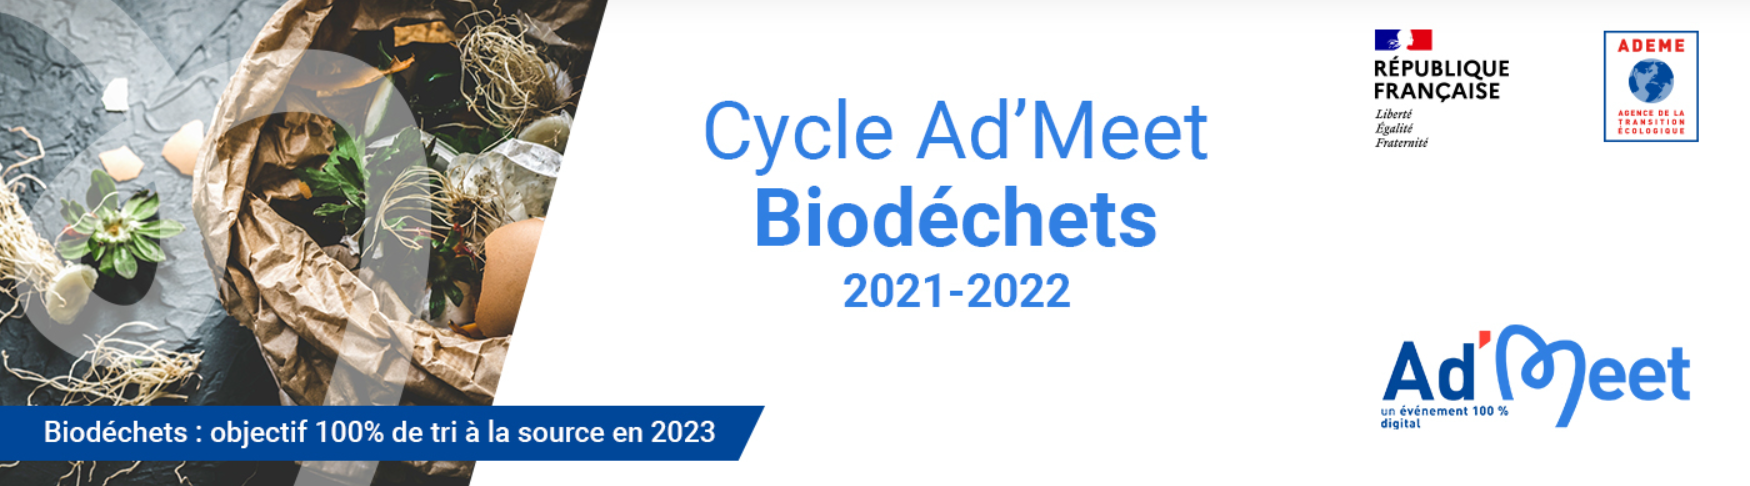 Cycle Ad'Meet Biodéchets - Ademe